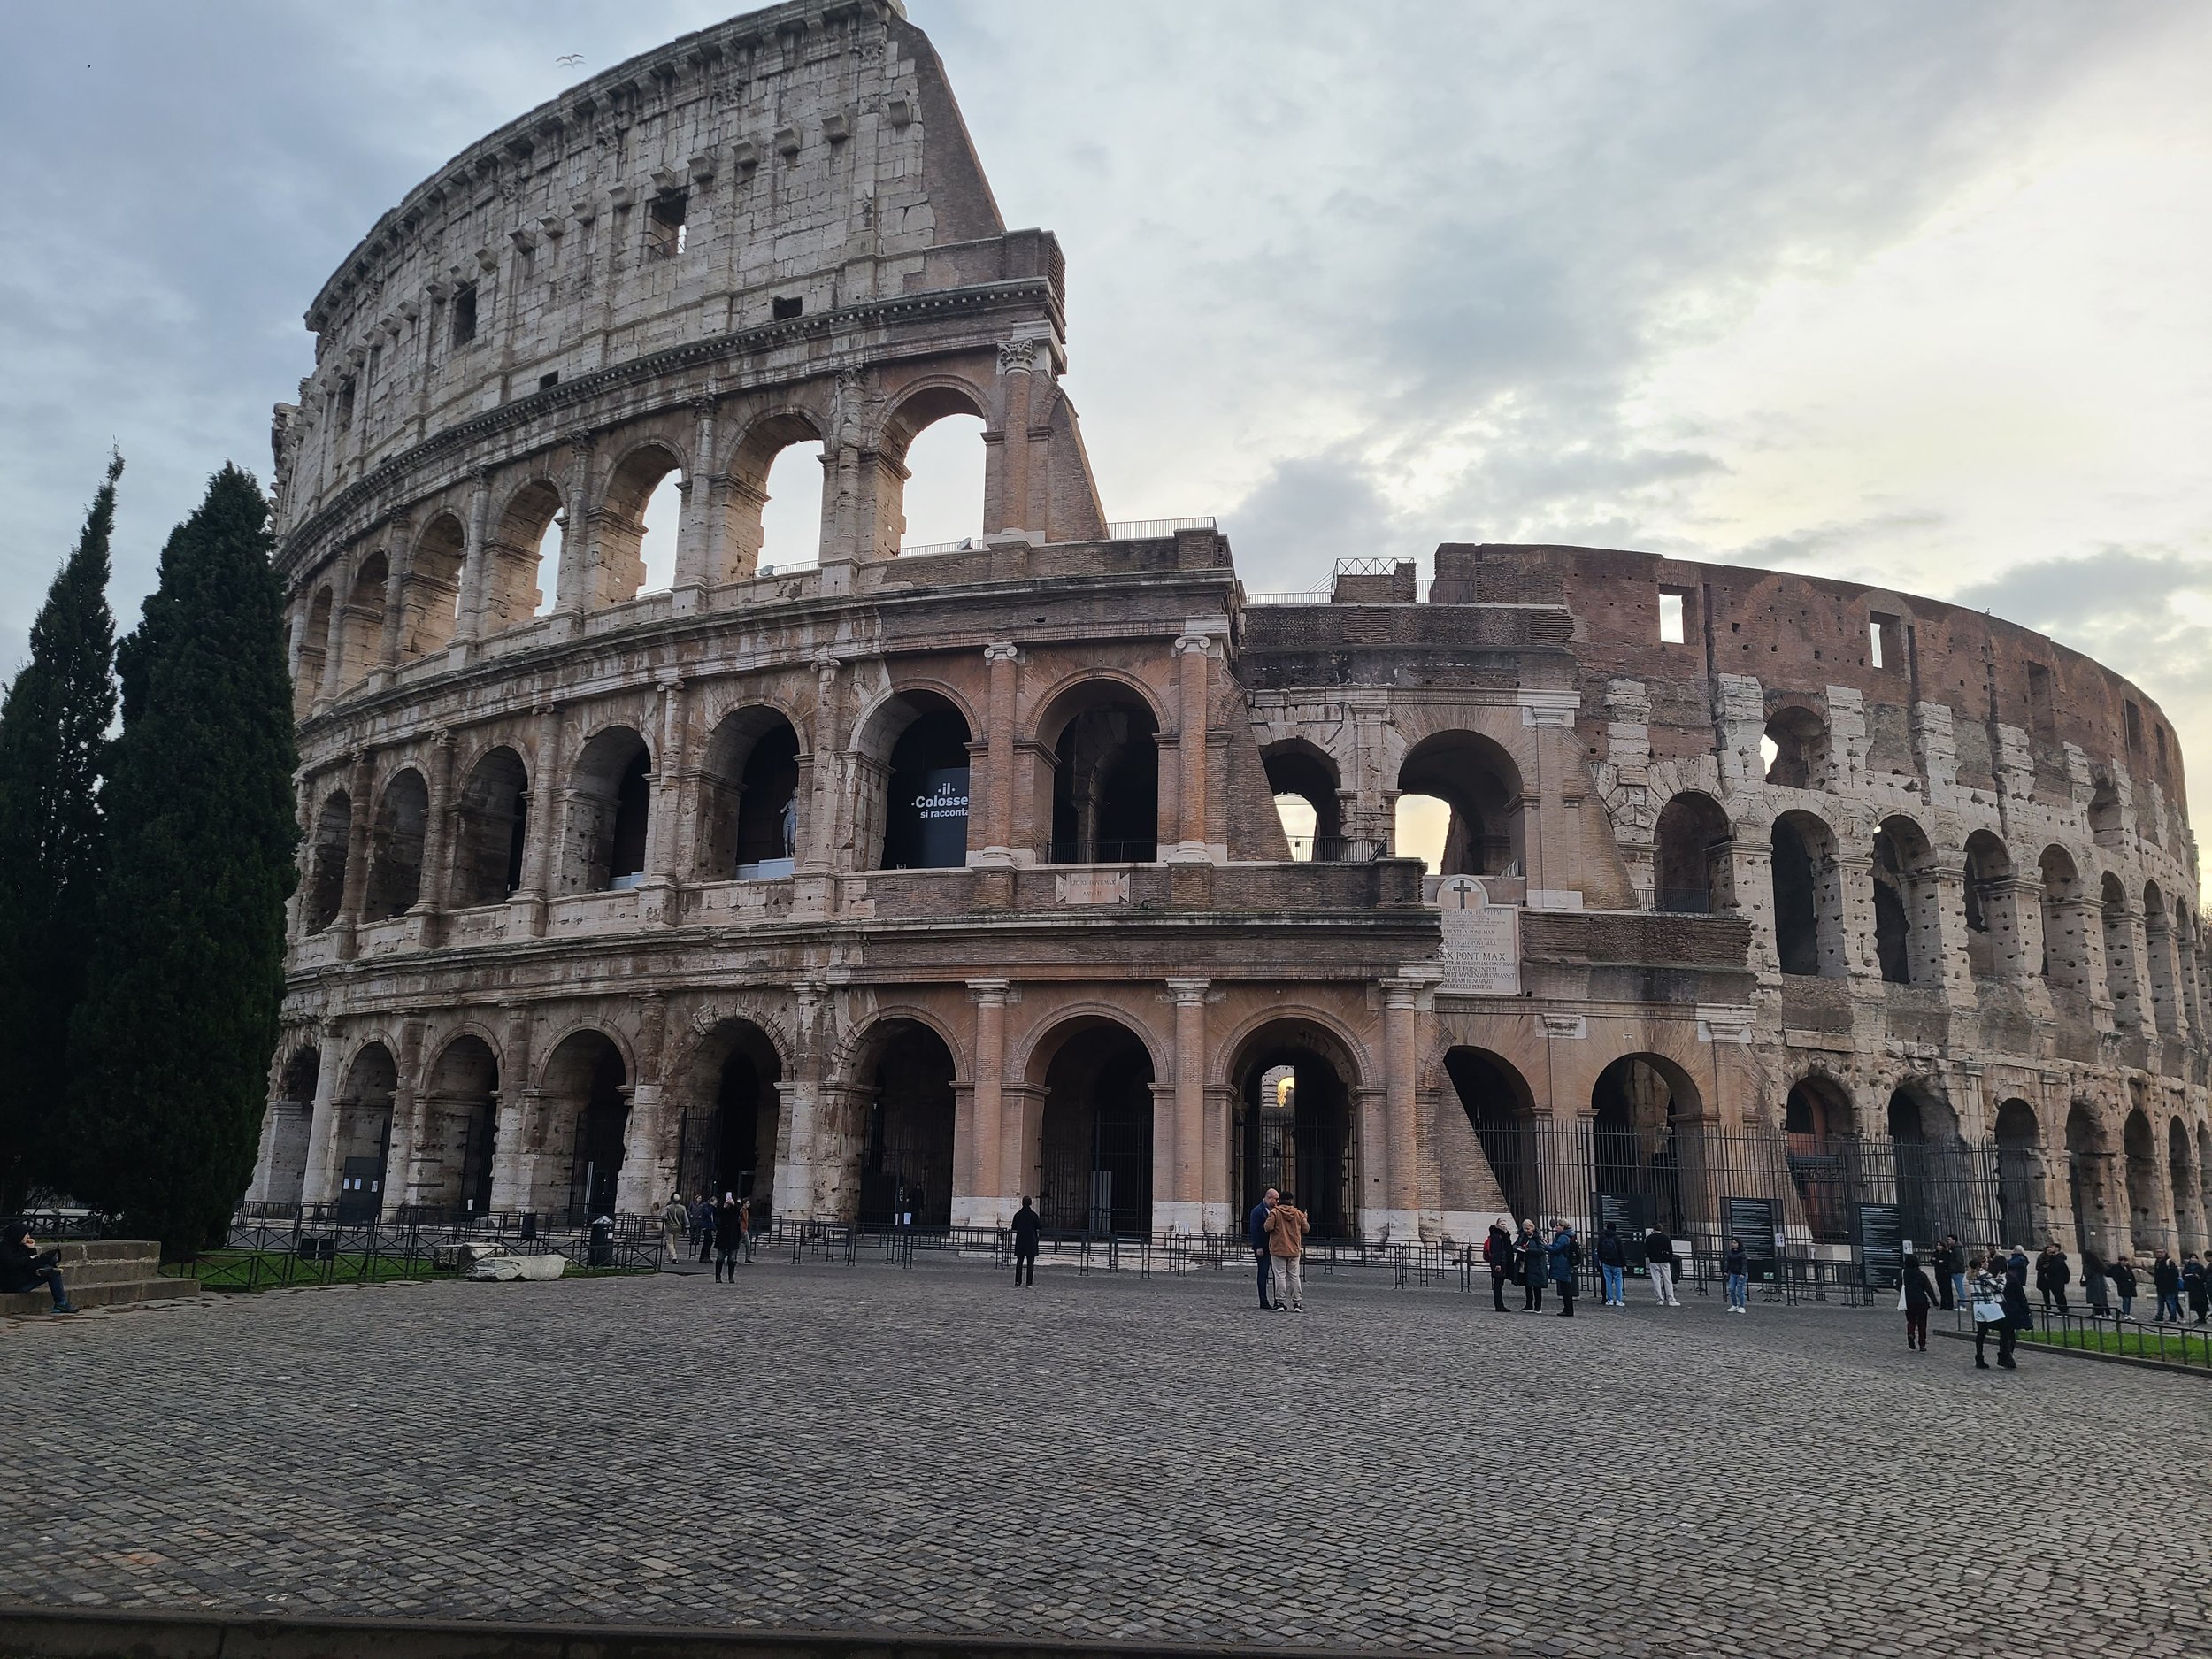 Exterior of the Colosseum